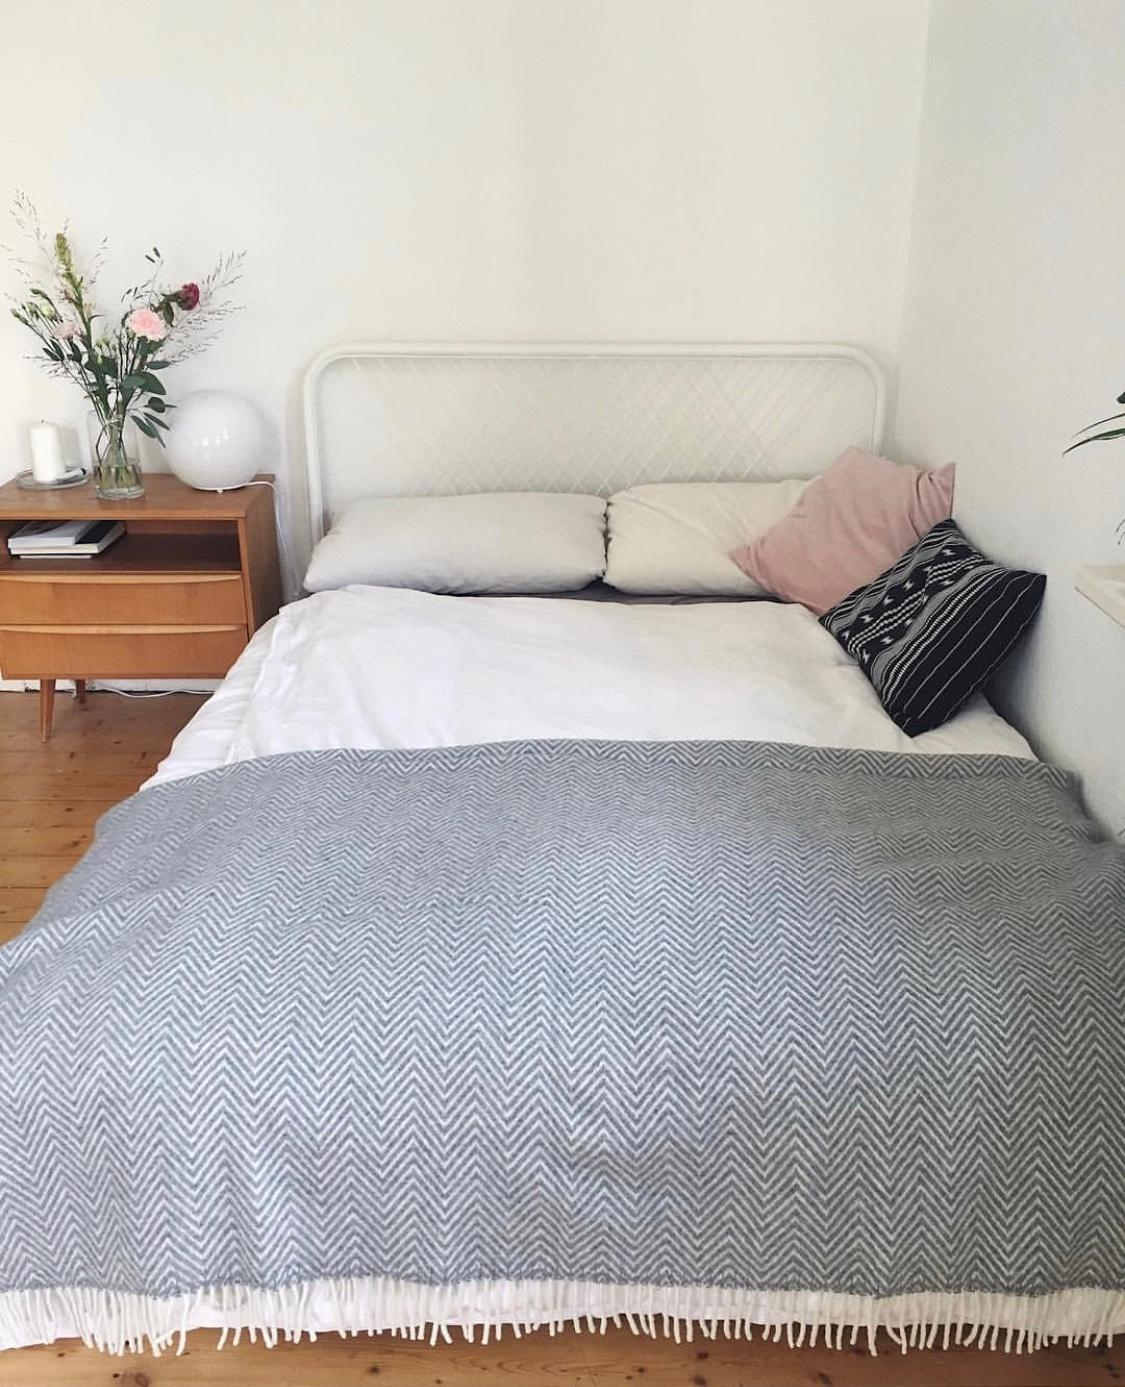 #bedroom #hygge #scandihome #minimalhome #minimalist #couchstyle #scandinavian #greyliving #whiteliving #vintage